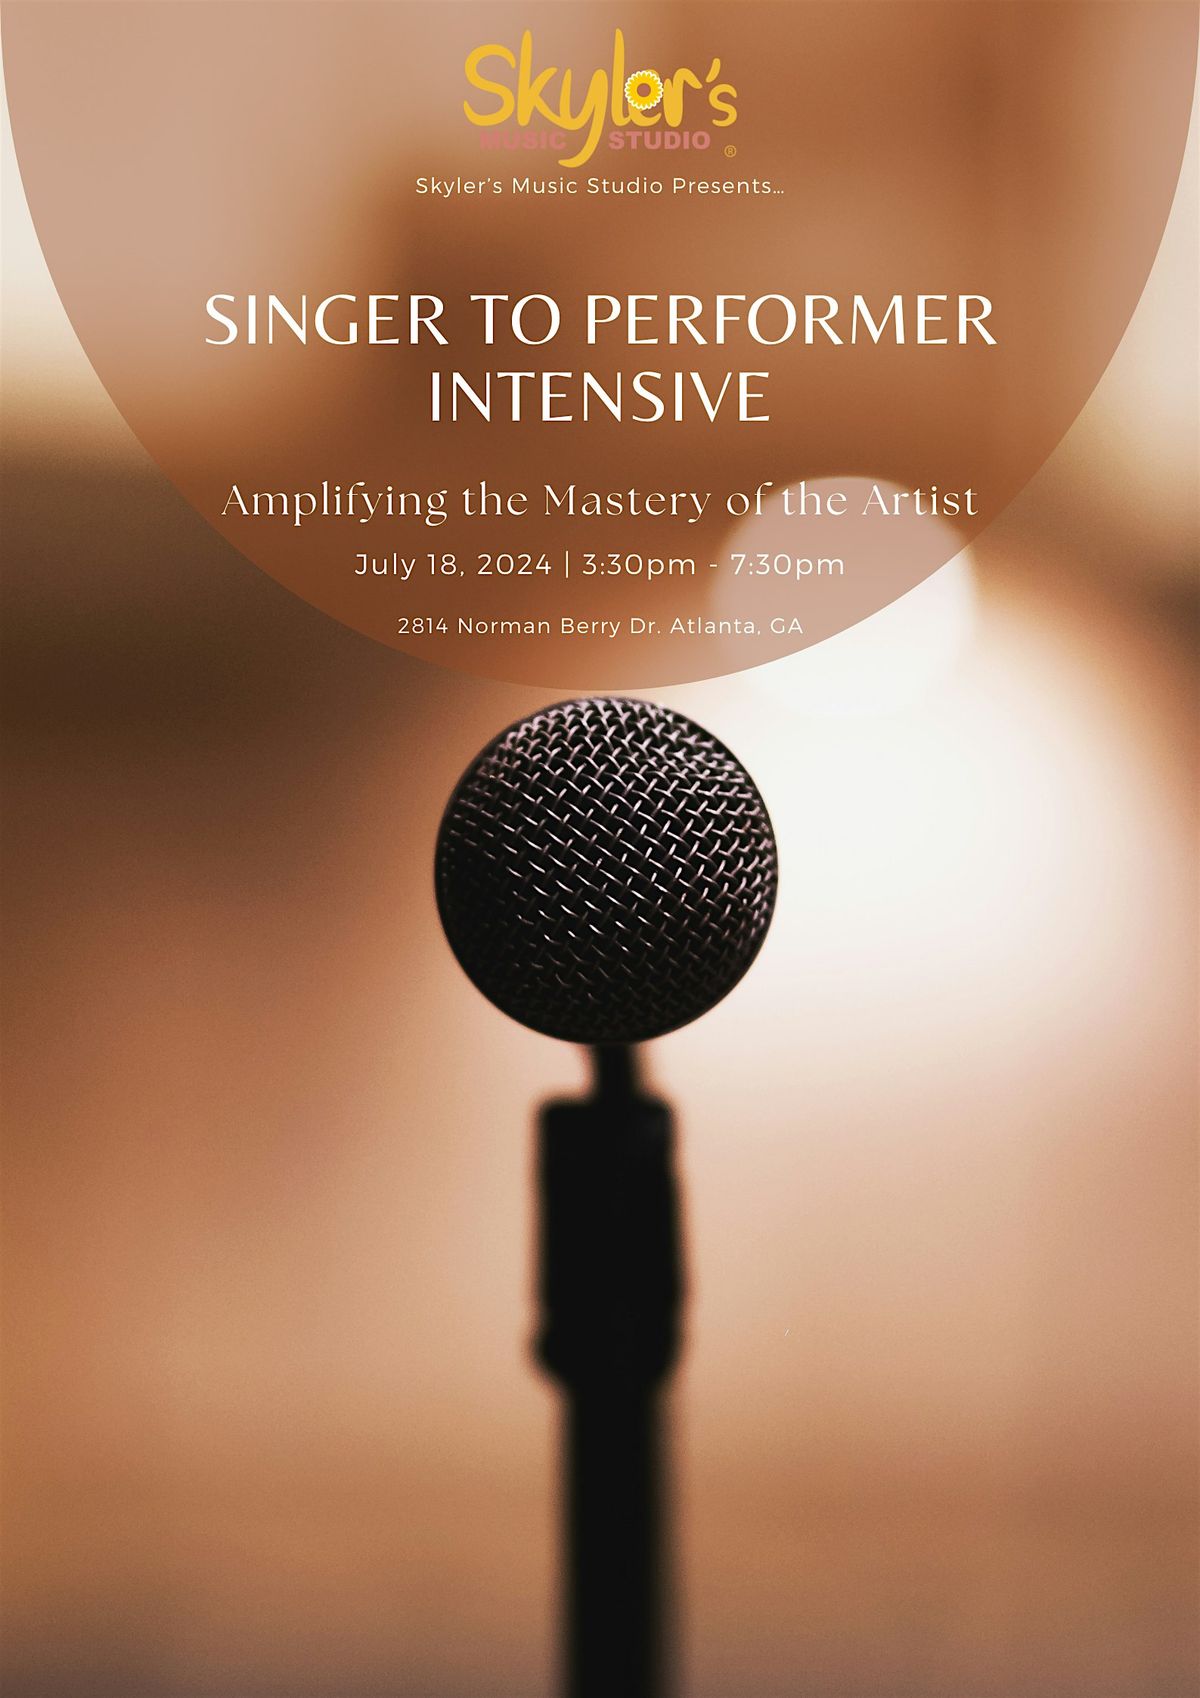 Singer to Performer Intensive